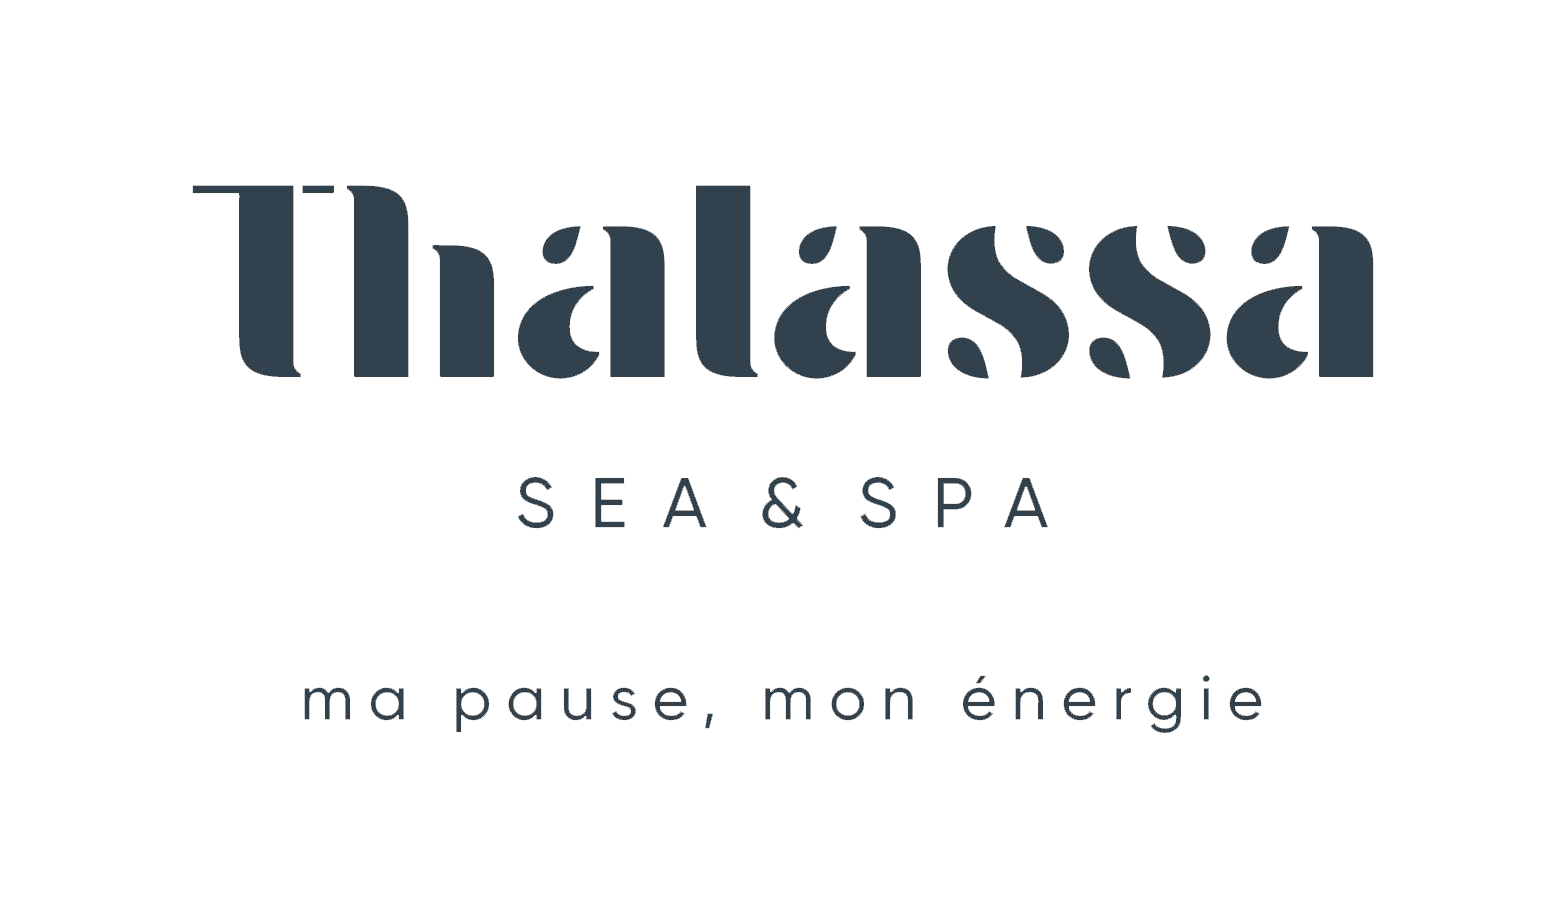 Miles com. Одежда "Thalassa". Thalassa Spa Анапа. Меркури отель логотип. Thalassa Лилия.